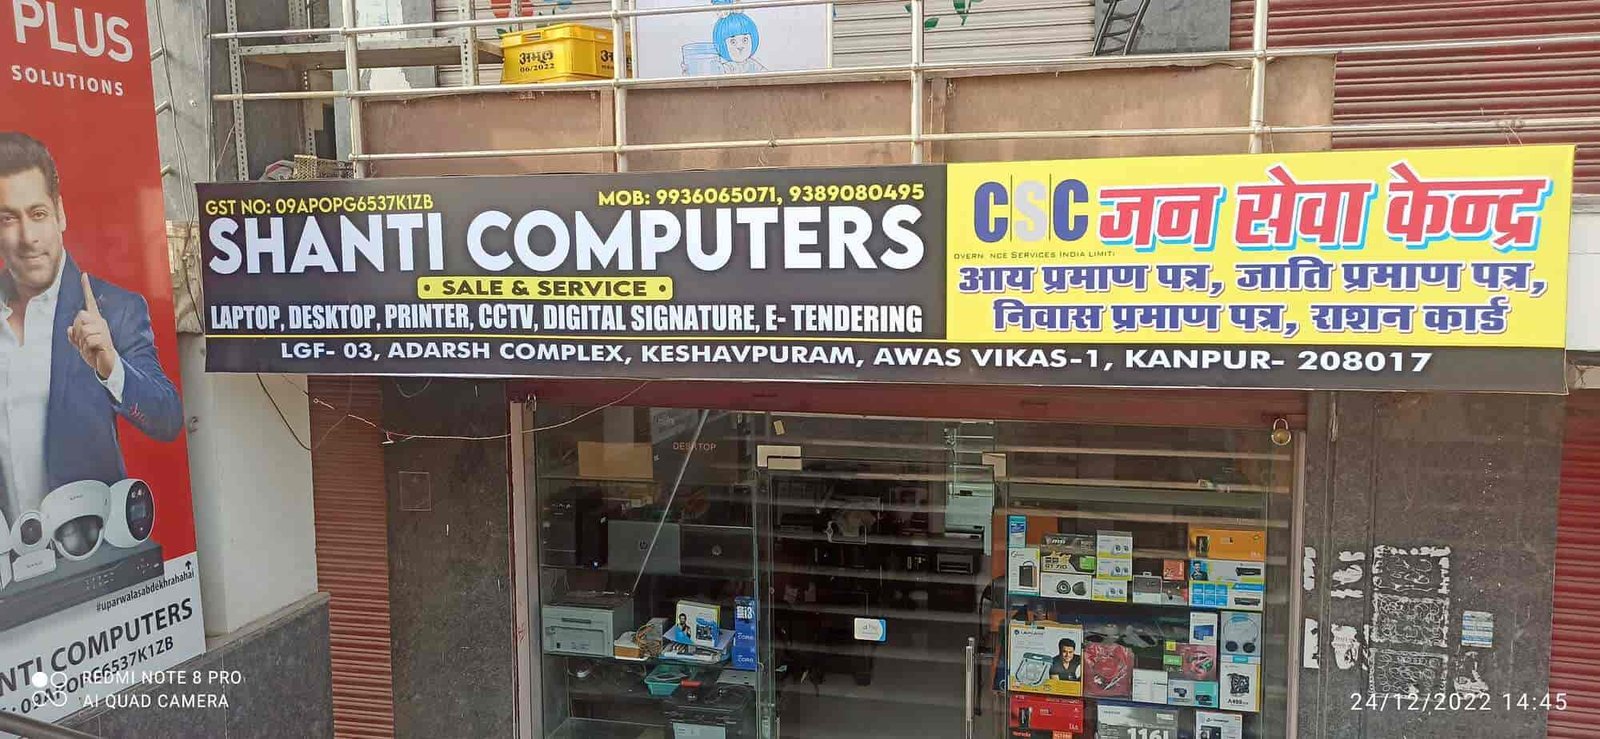 Shanti Computers 